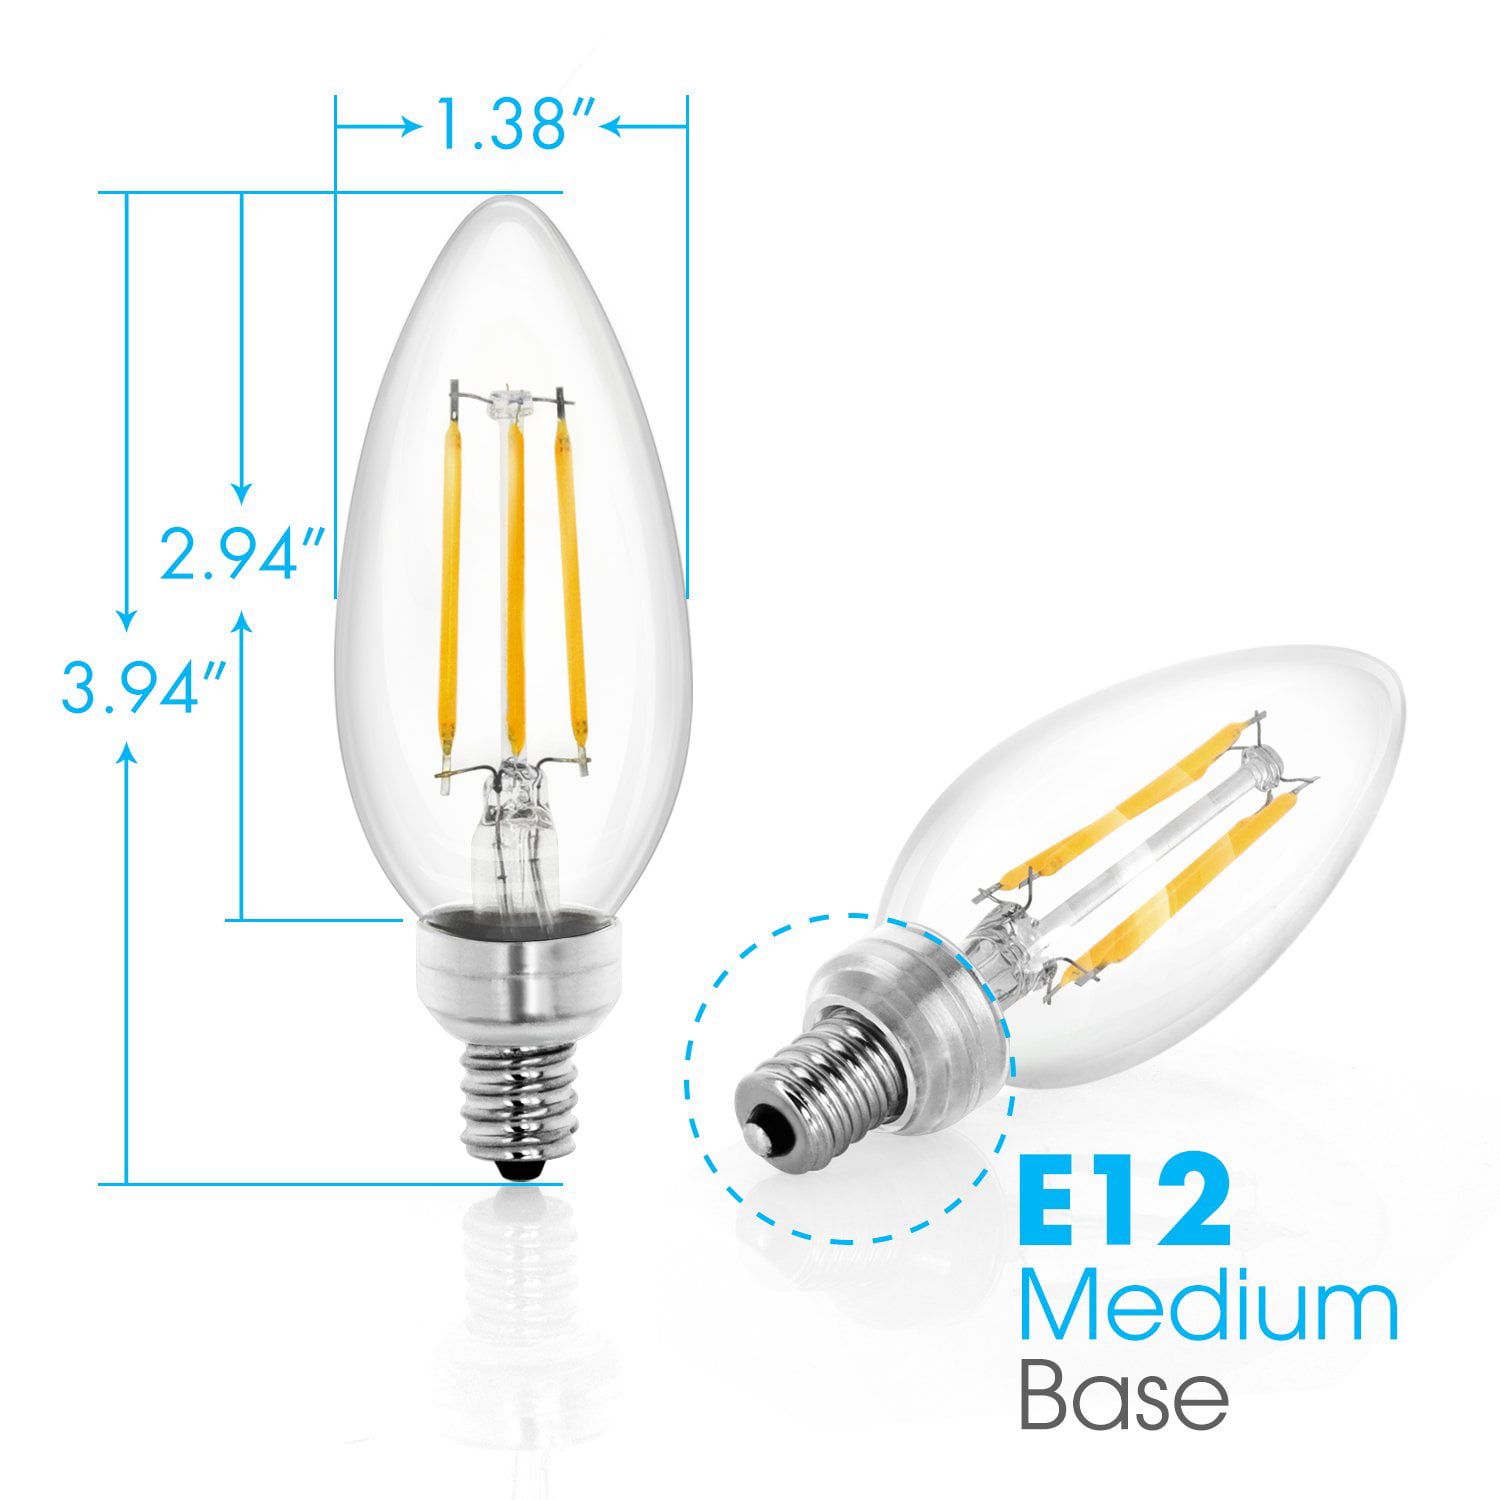 Sailstar E12 LED Candelabra Bulbs Dimmable,40 Watt Equivalent 3000K Warm White Chandelier Light Bulbs,4W Filament Candle LED Bulbs,Flame Tip,500 Lumen,Pack of 6 